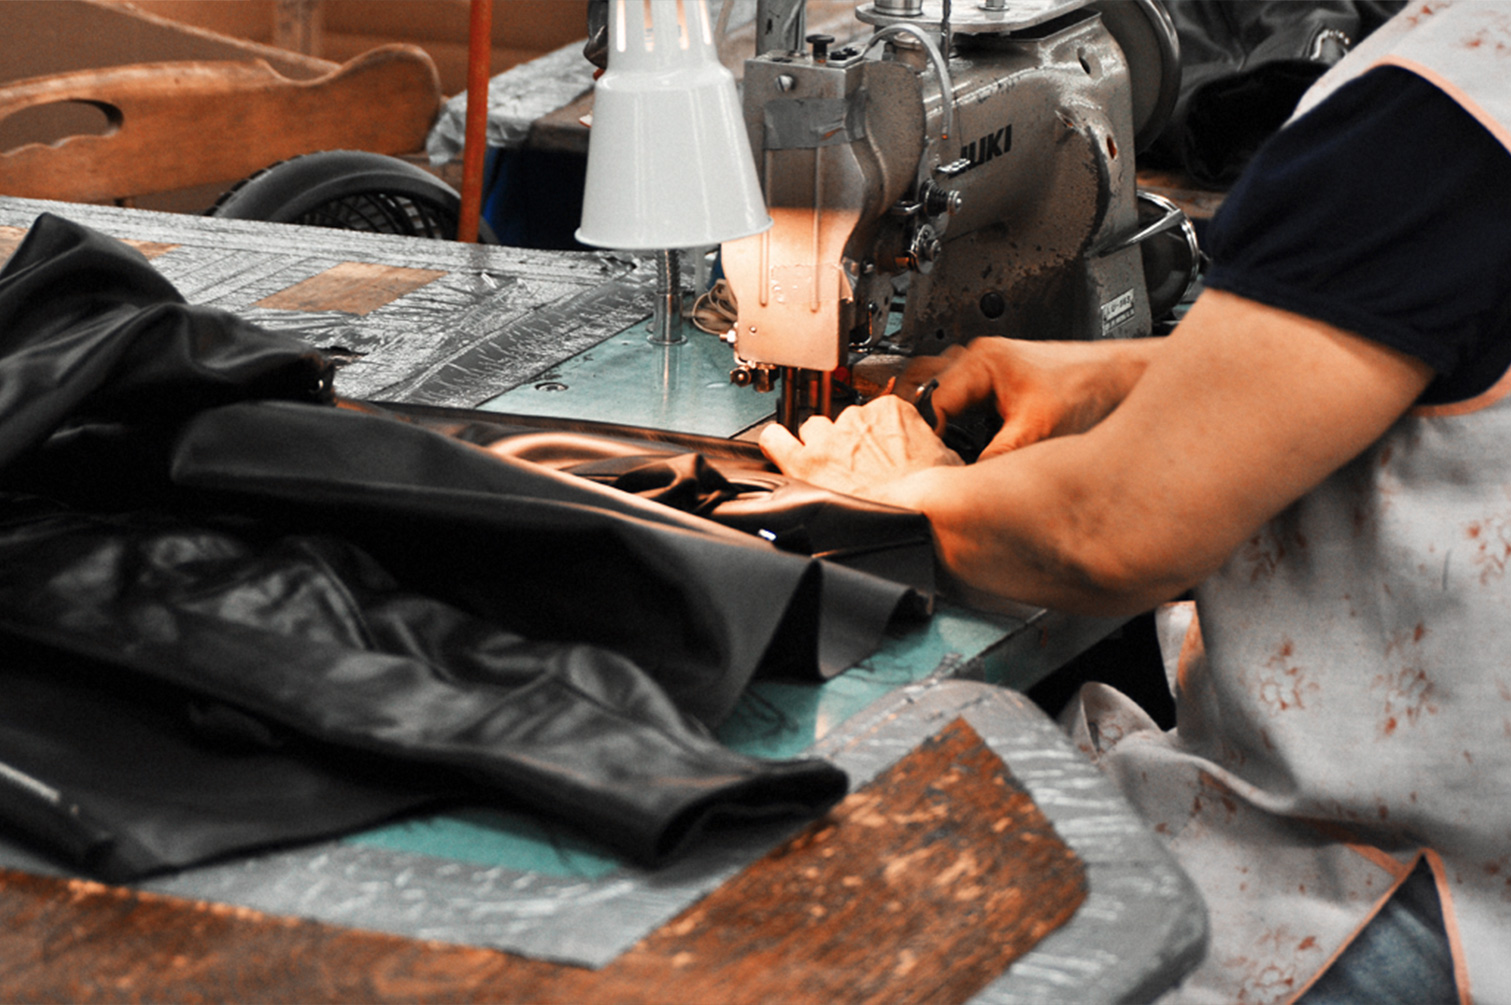 Woman at a sewing machine assembling jackets